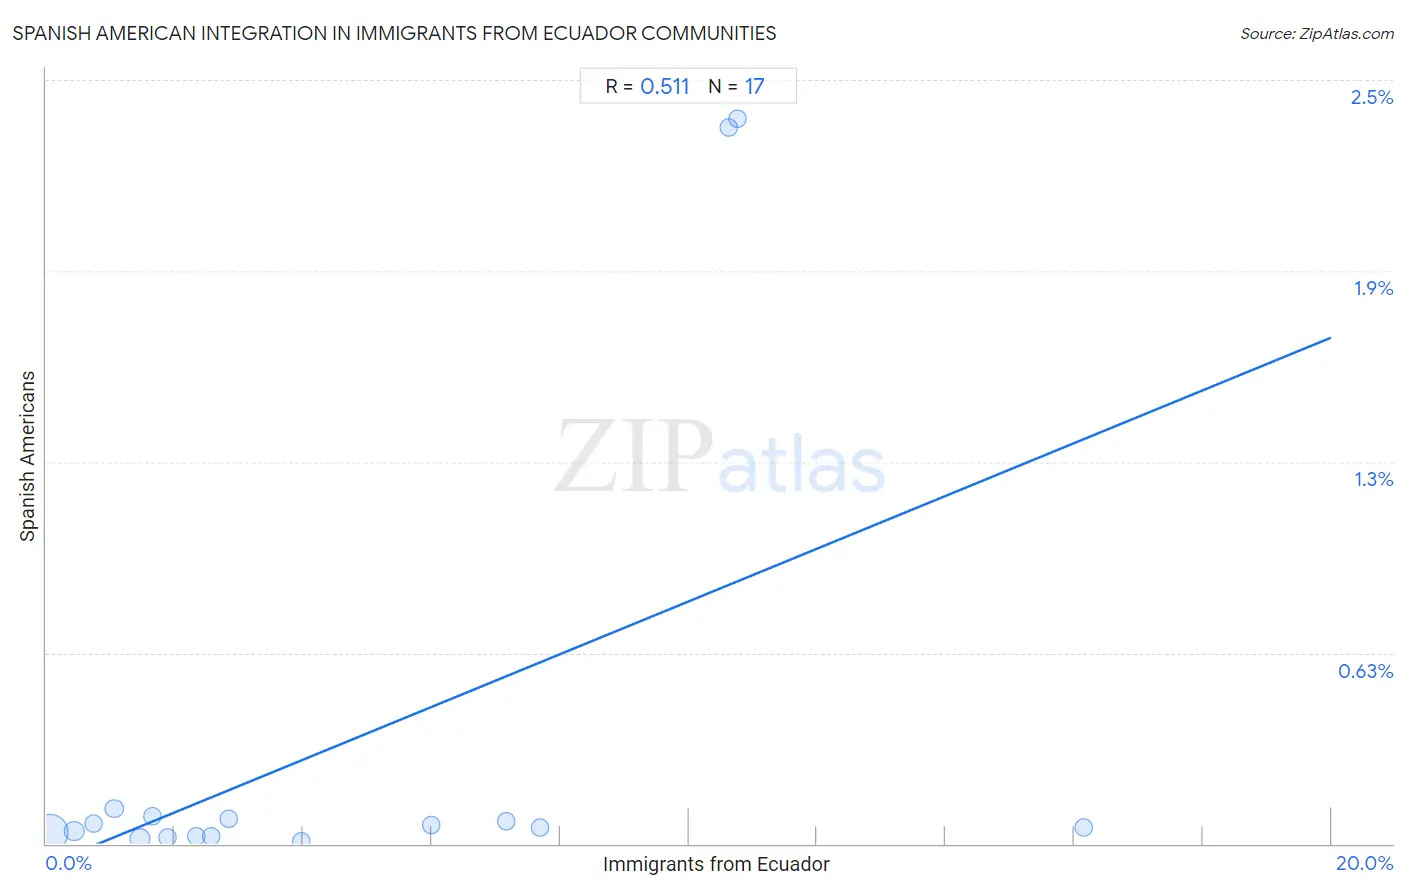 Immigrants from Ecuador Integration in Spanish American Communities